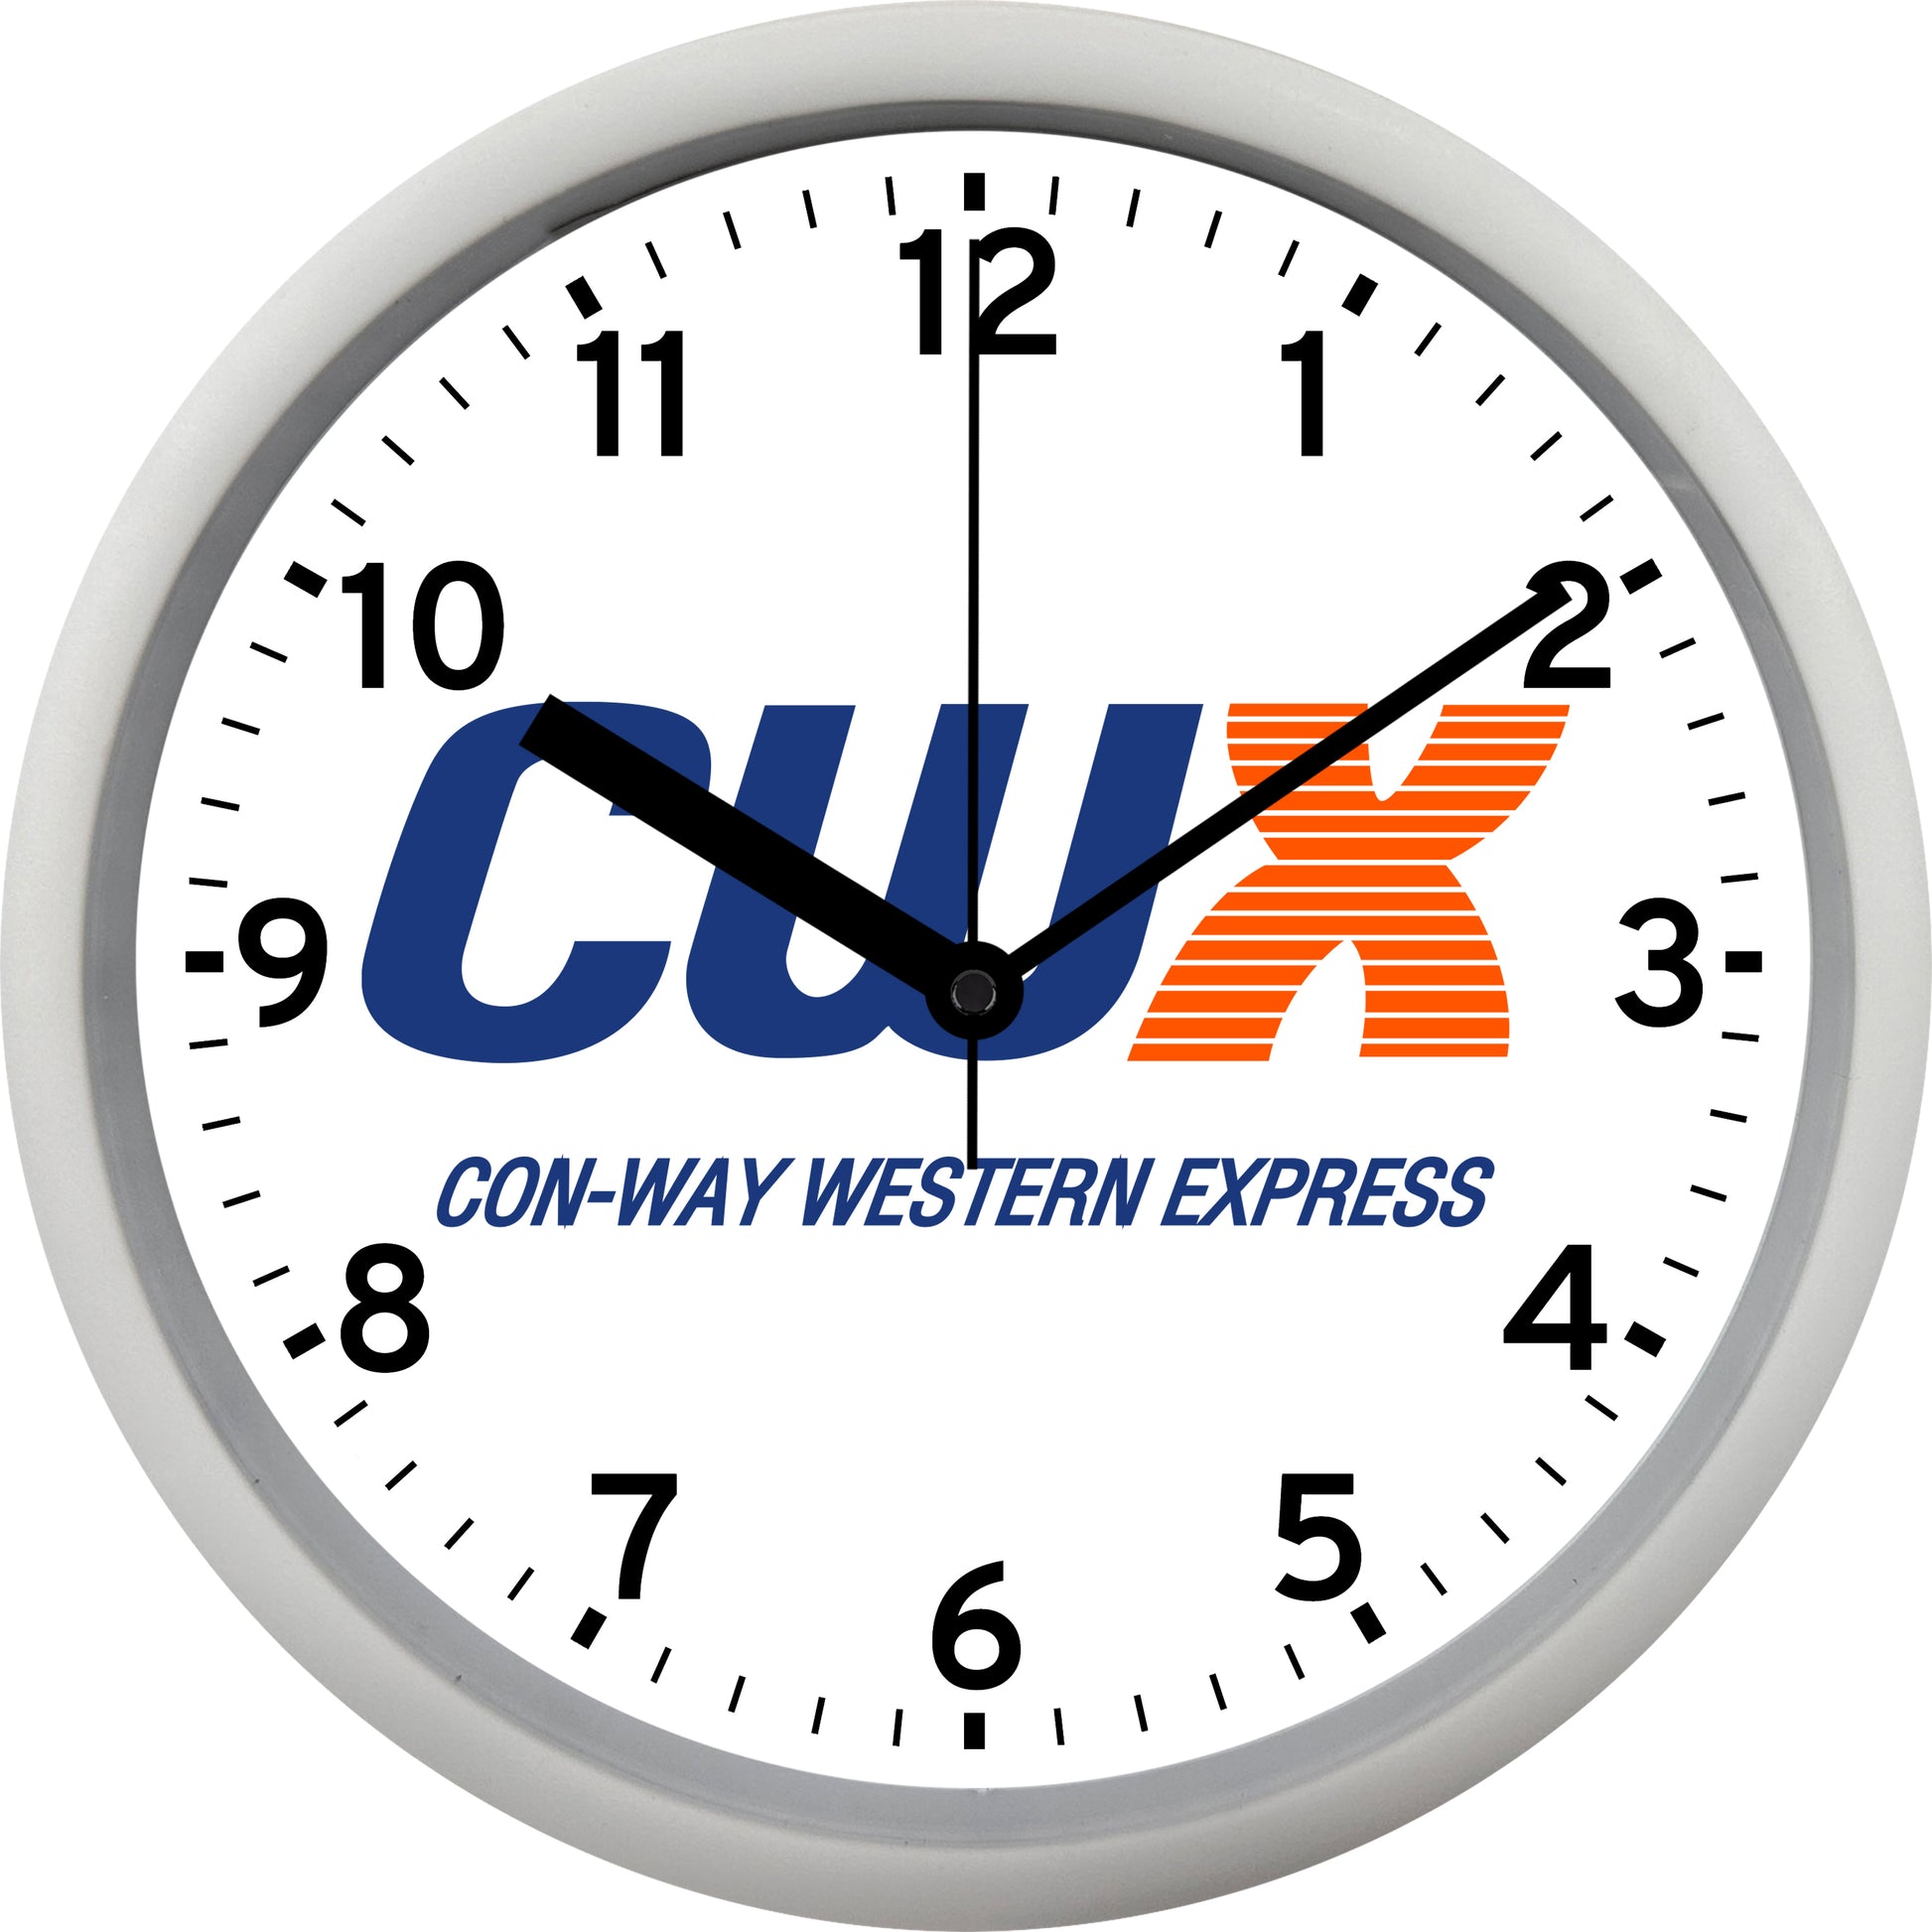 Con-Way Western Express "CWX" Wall Clock